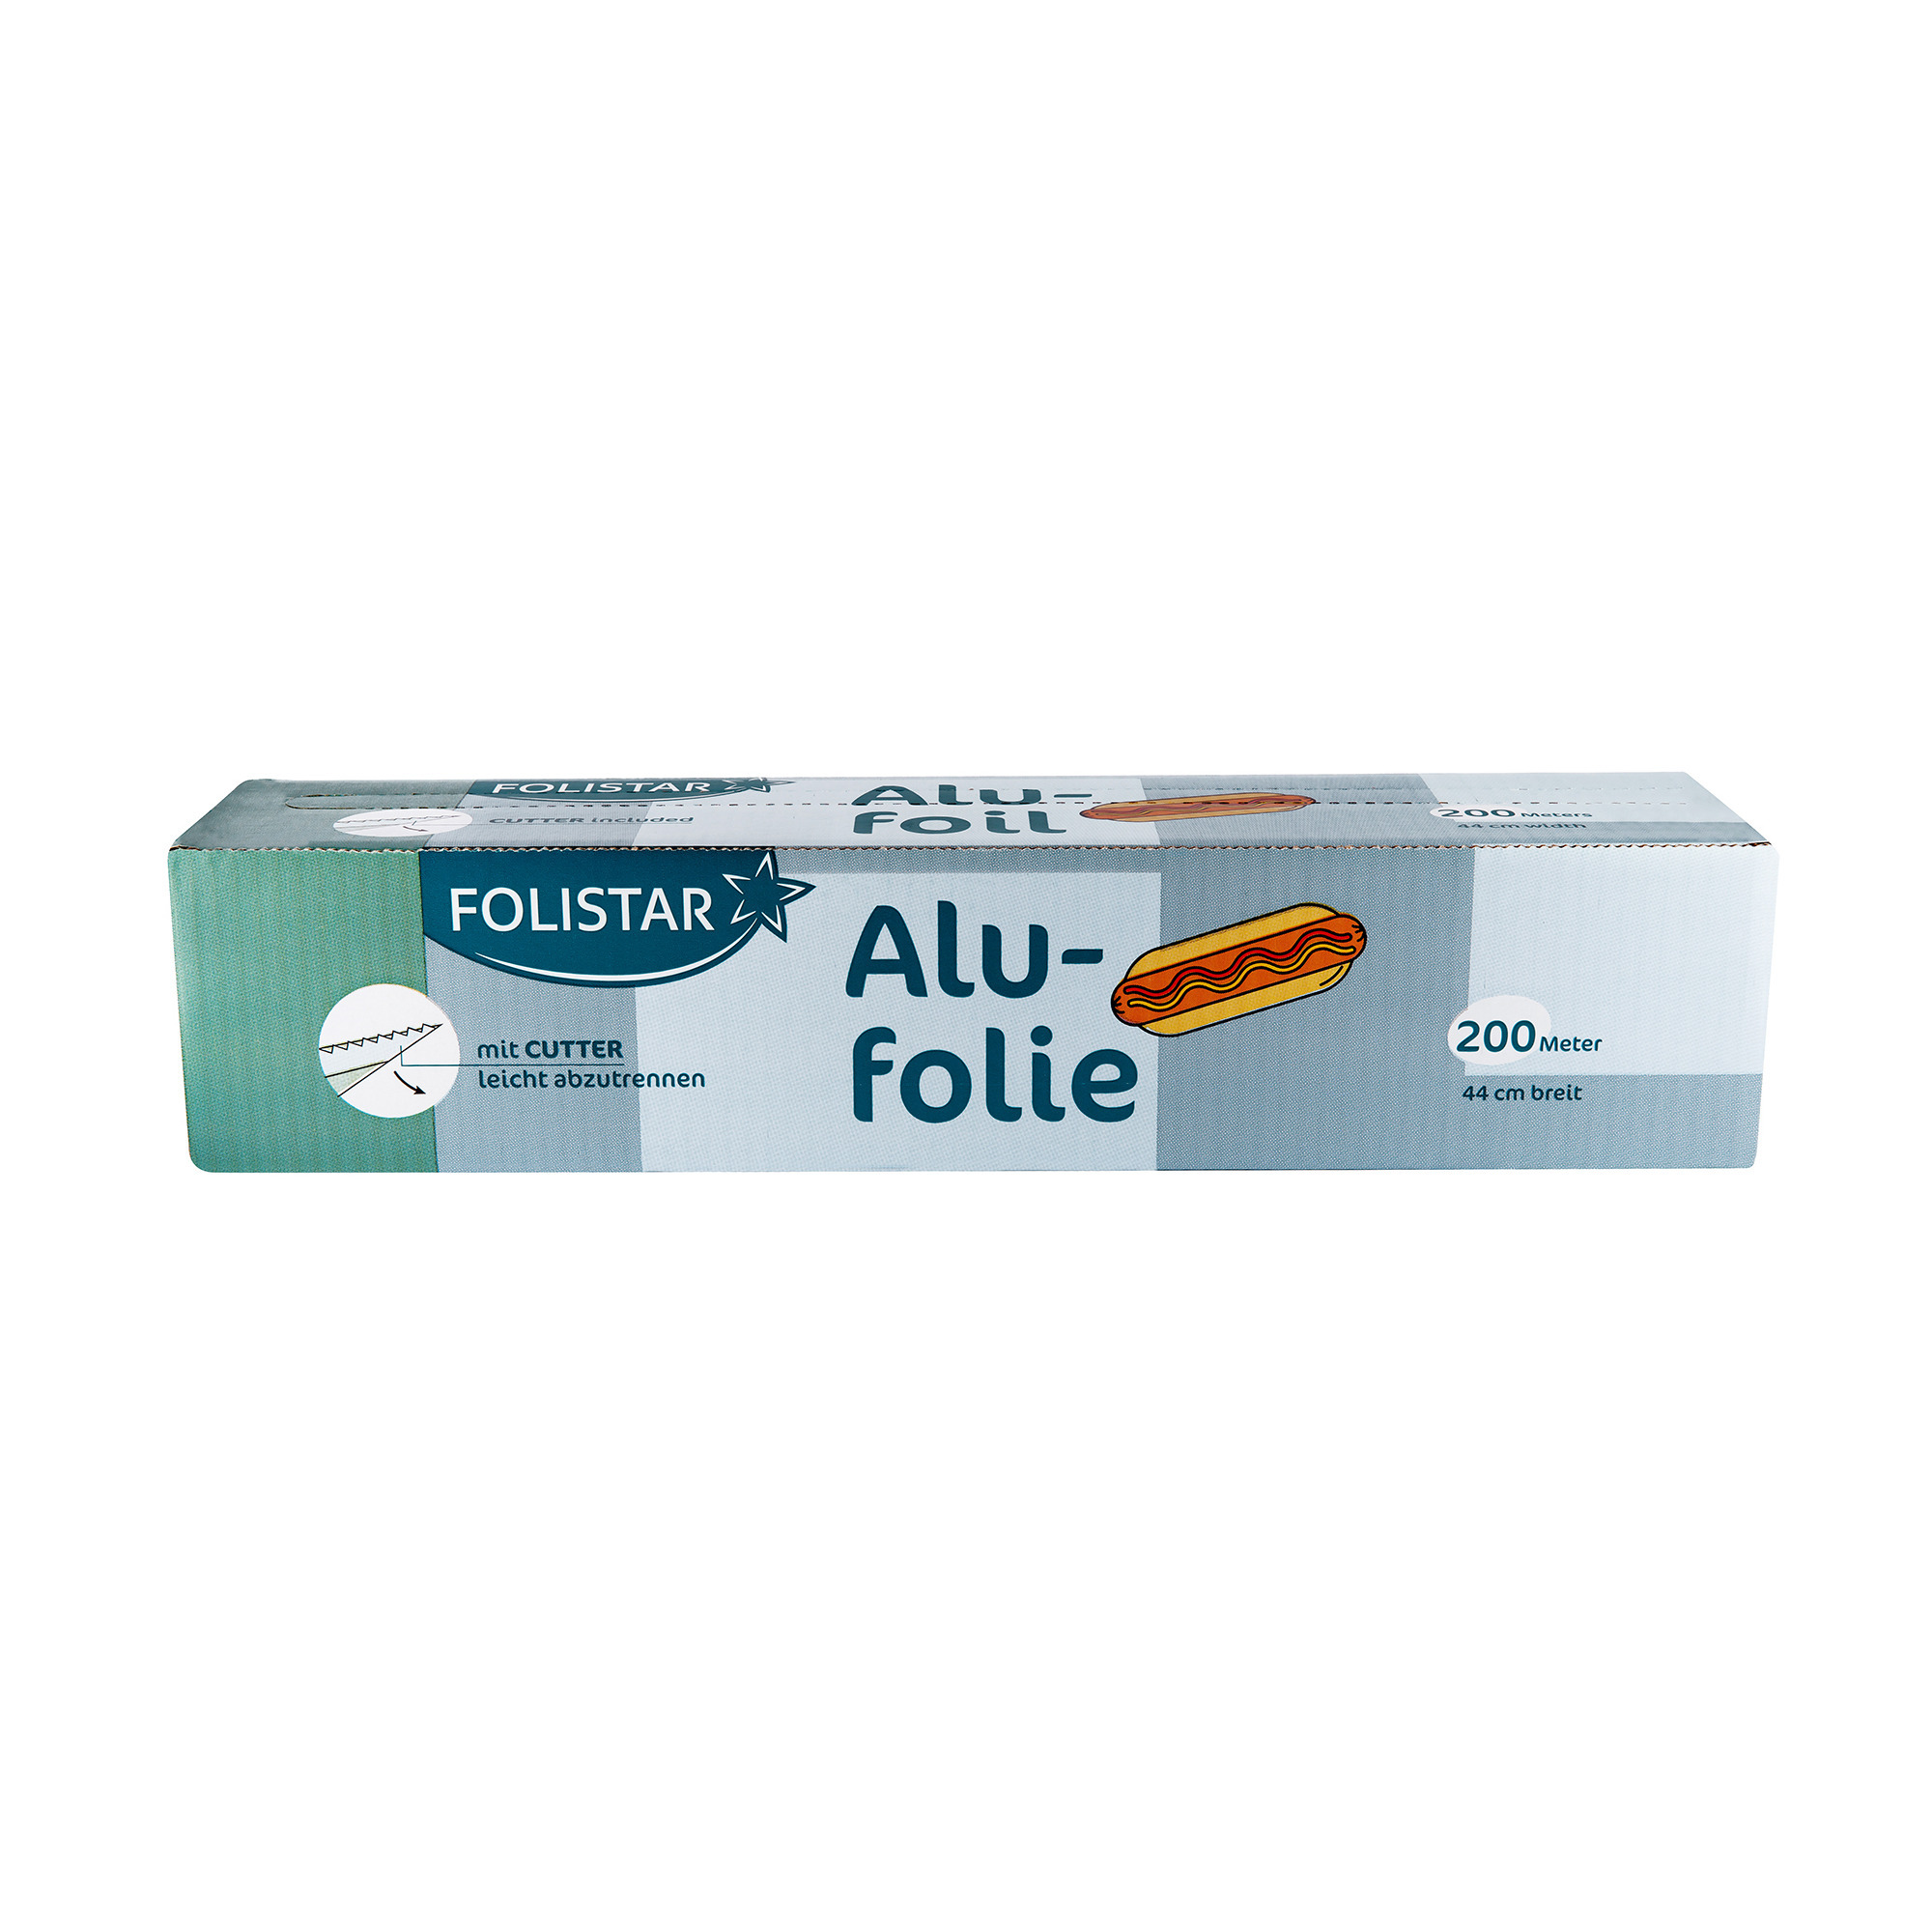 Folistar Alufolie 200mx44cm